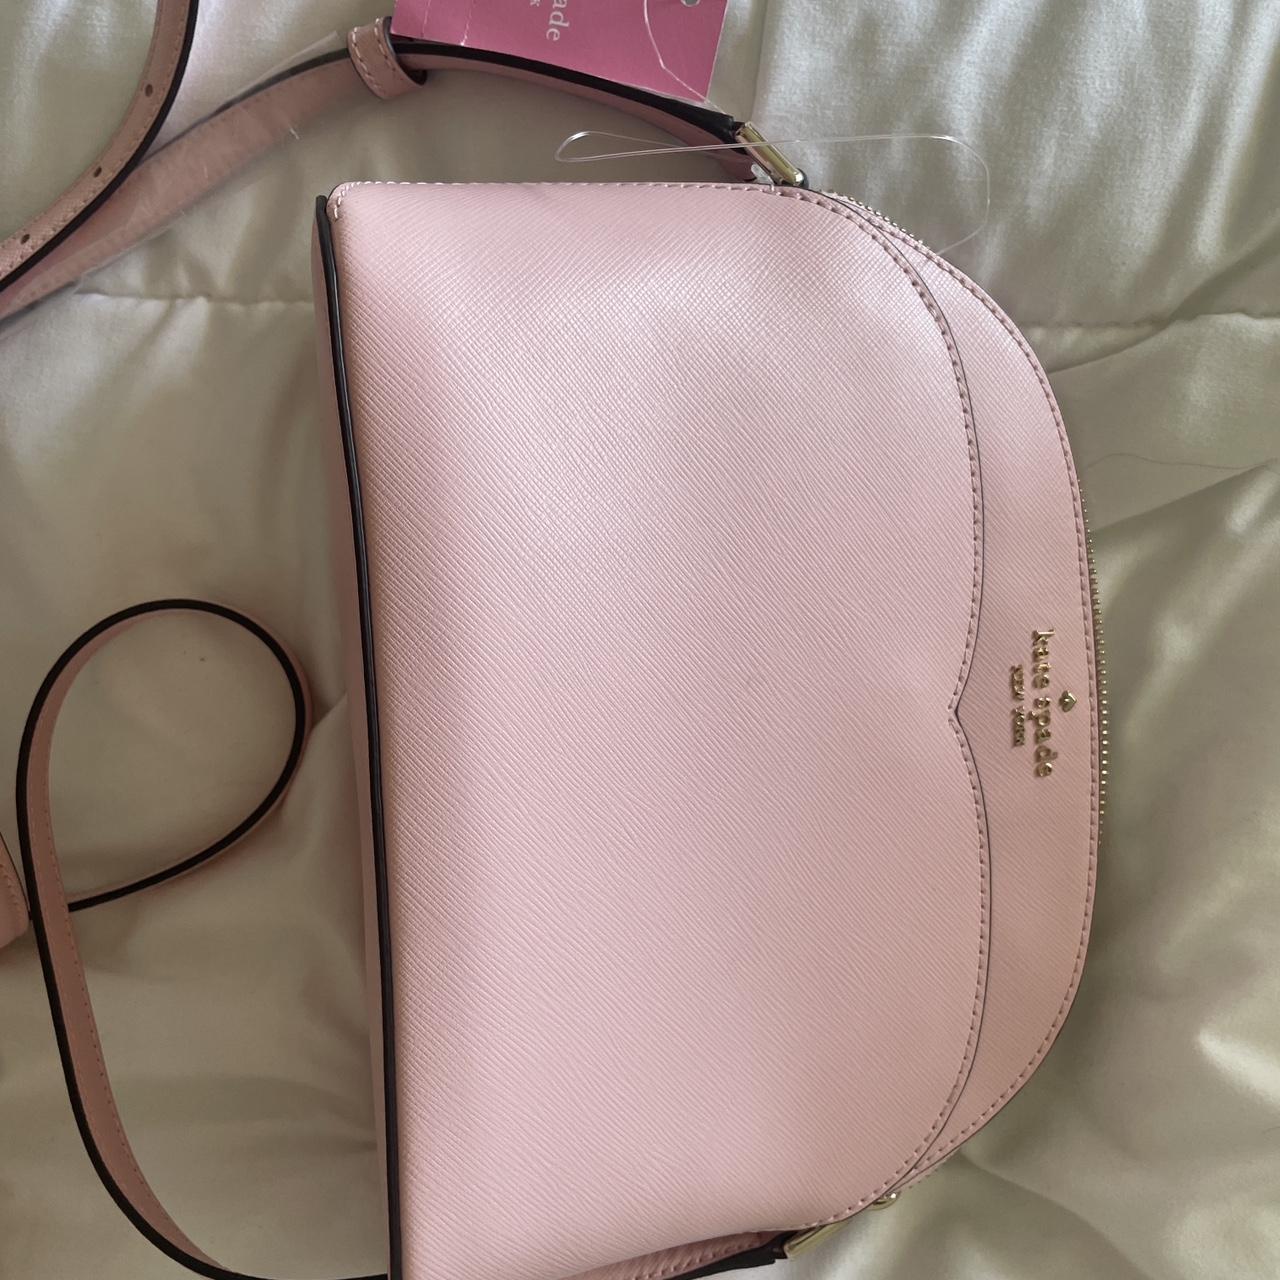 Buy Kate Spade Talia Leather Zip Crossbody Bag Purse Handbag (Peachy Rose)  at Amazon.in